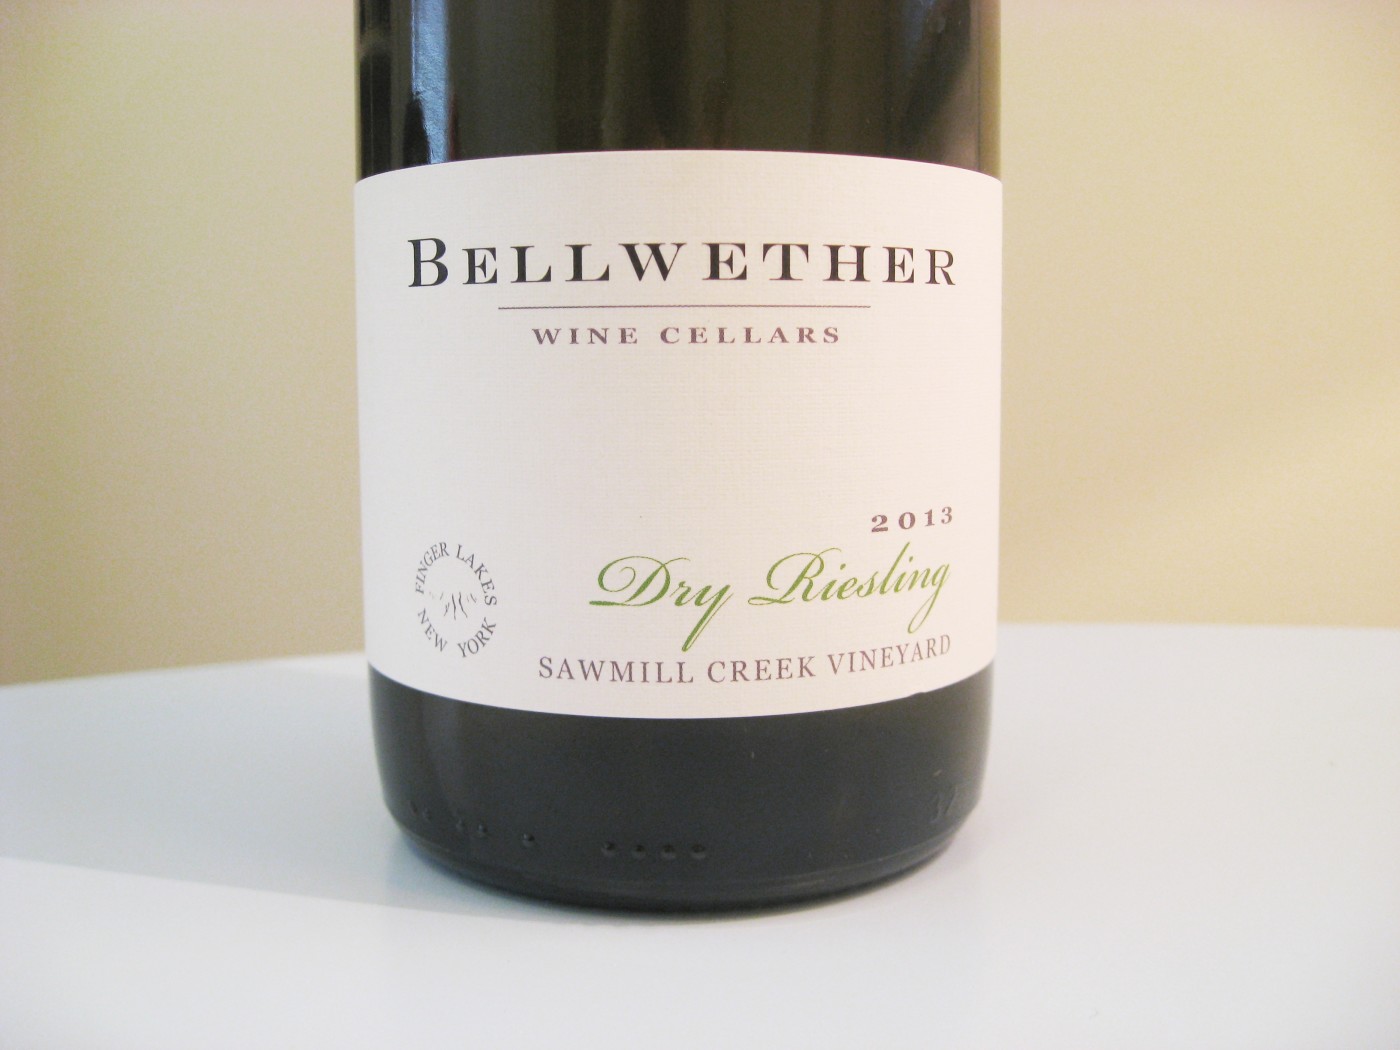 Bellwether Wine Cellars, Dry Riesling 2013, Sawmill Creek Vineyard, Finger Lakes, New York, Wine Casual